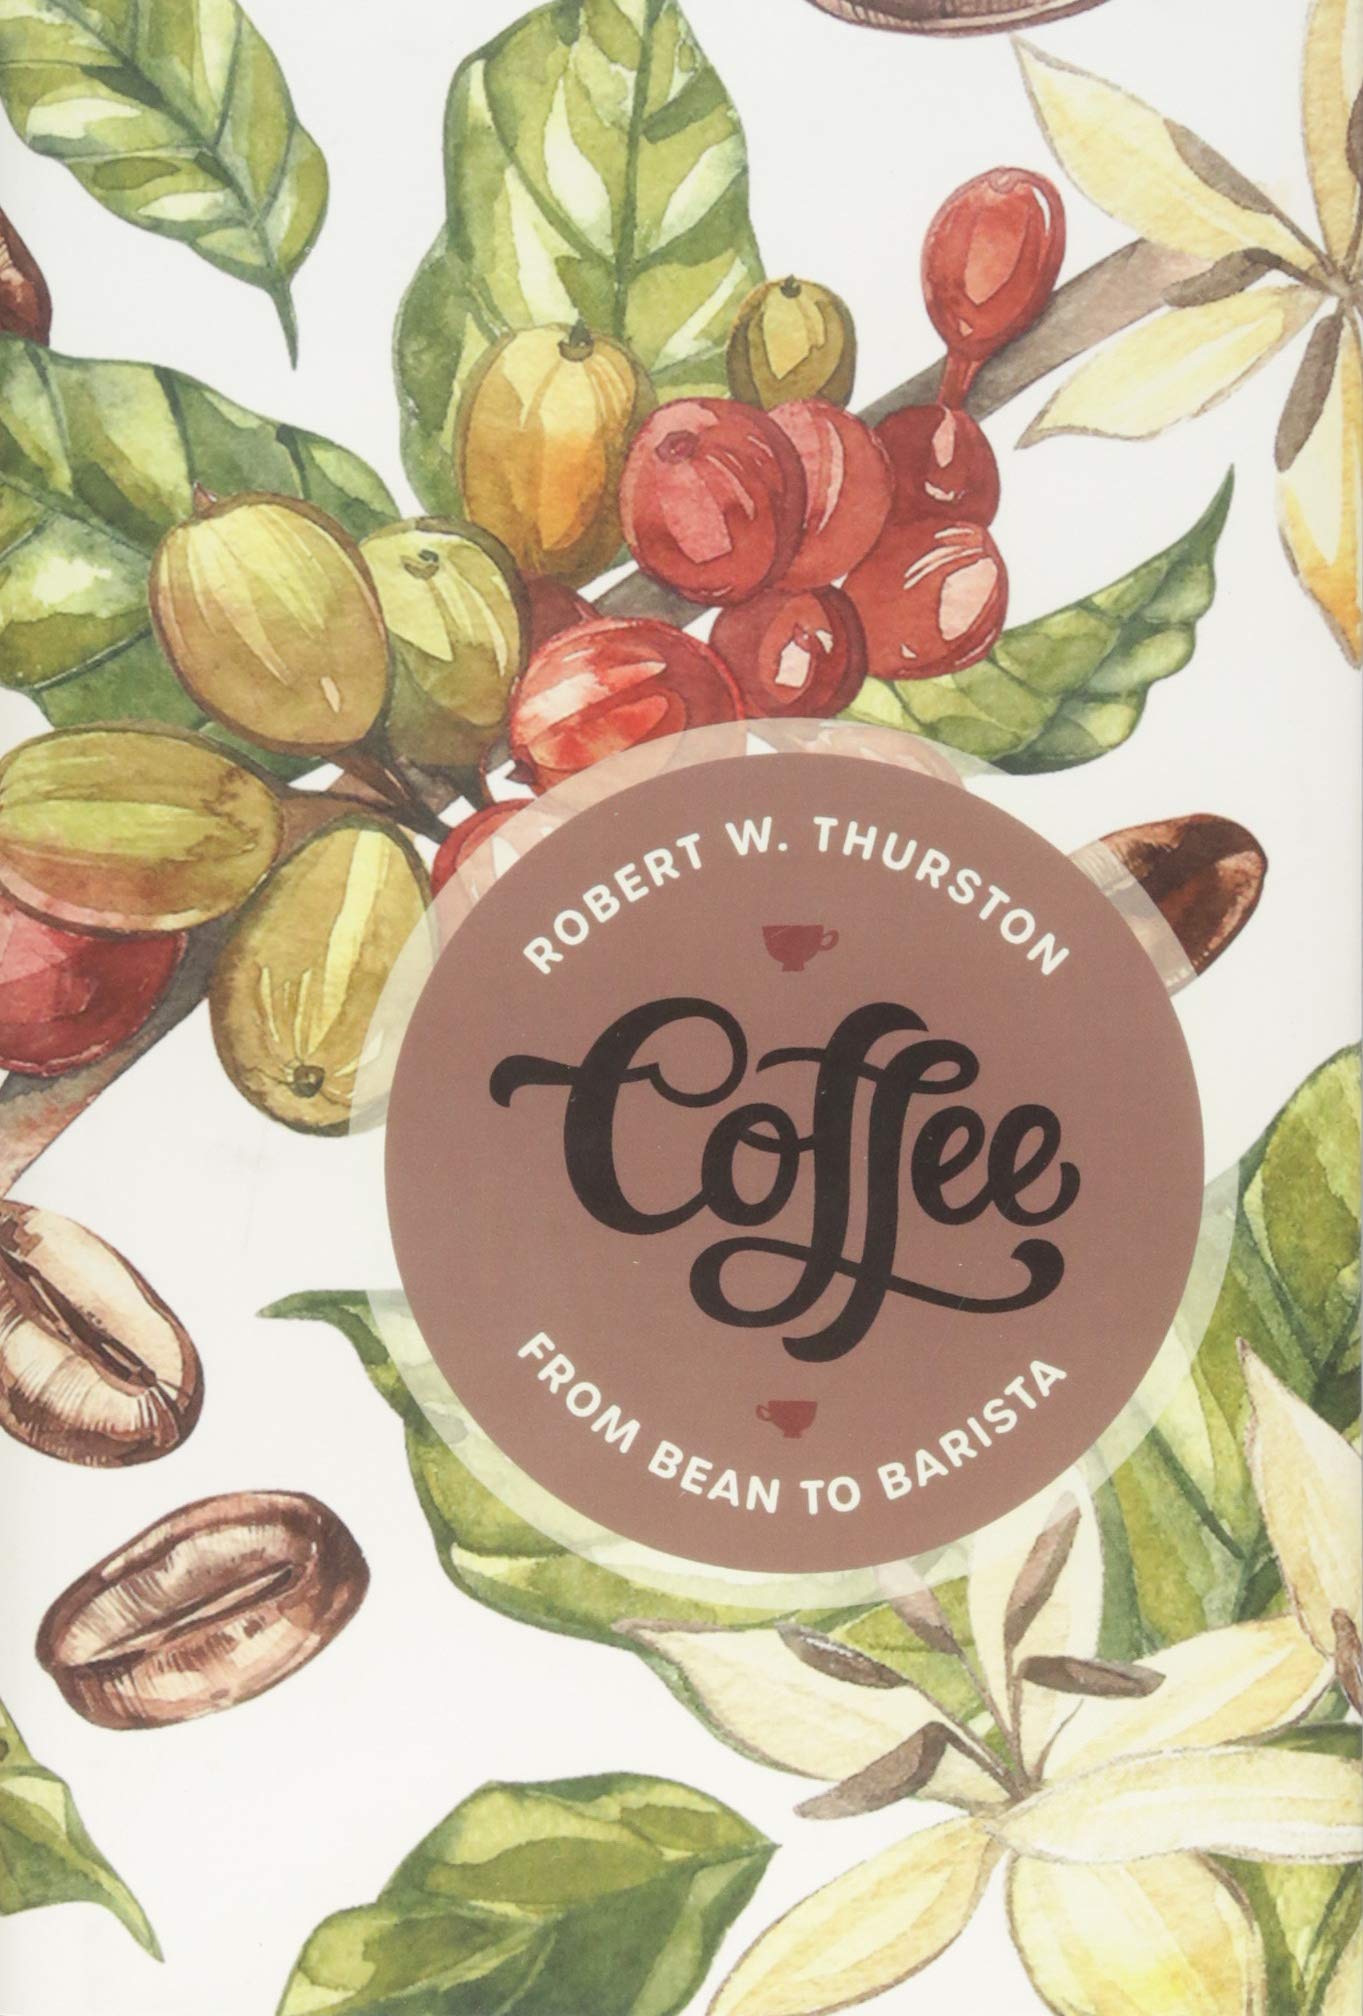 Coffee: From Bean to Barista (Robert W. Thurston)